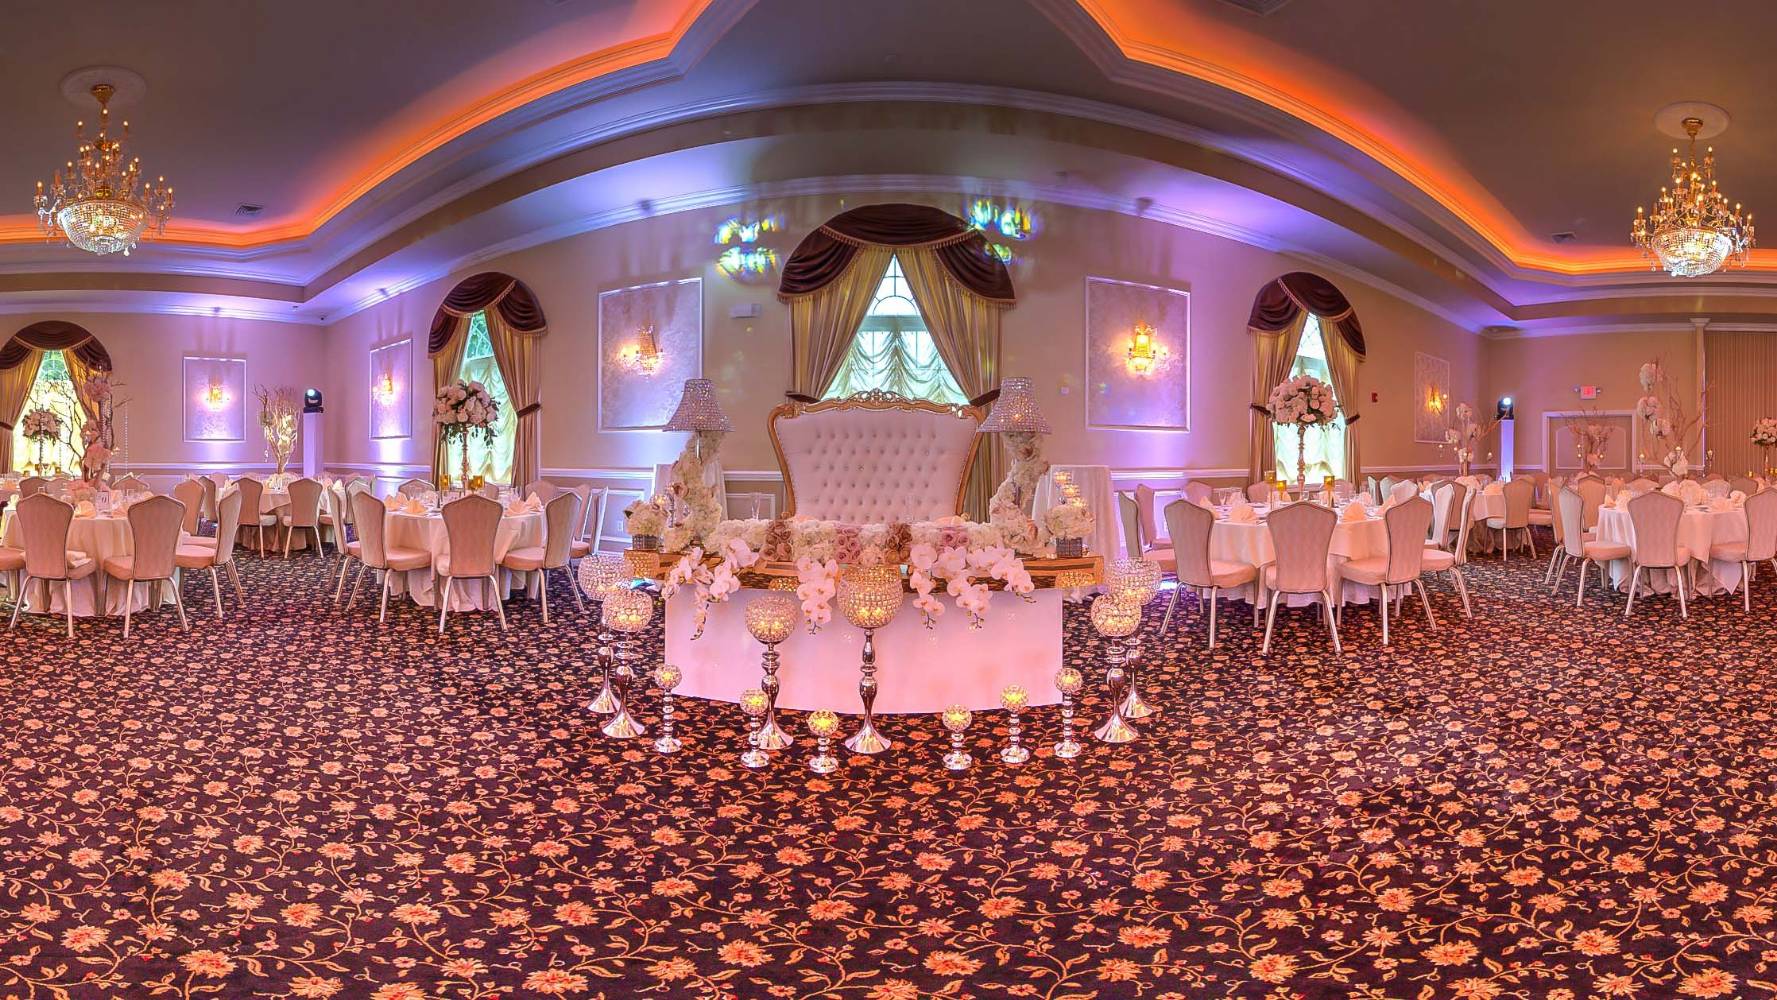 View Virtual Tour of Casa Bianca Banquets in Oak Ridge, NJ | 360 Site Visit